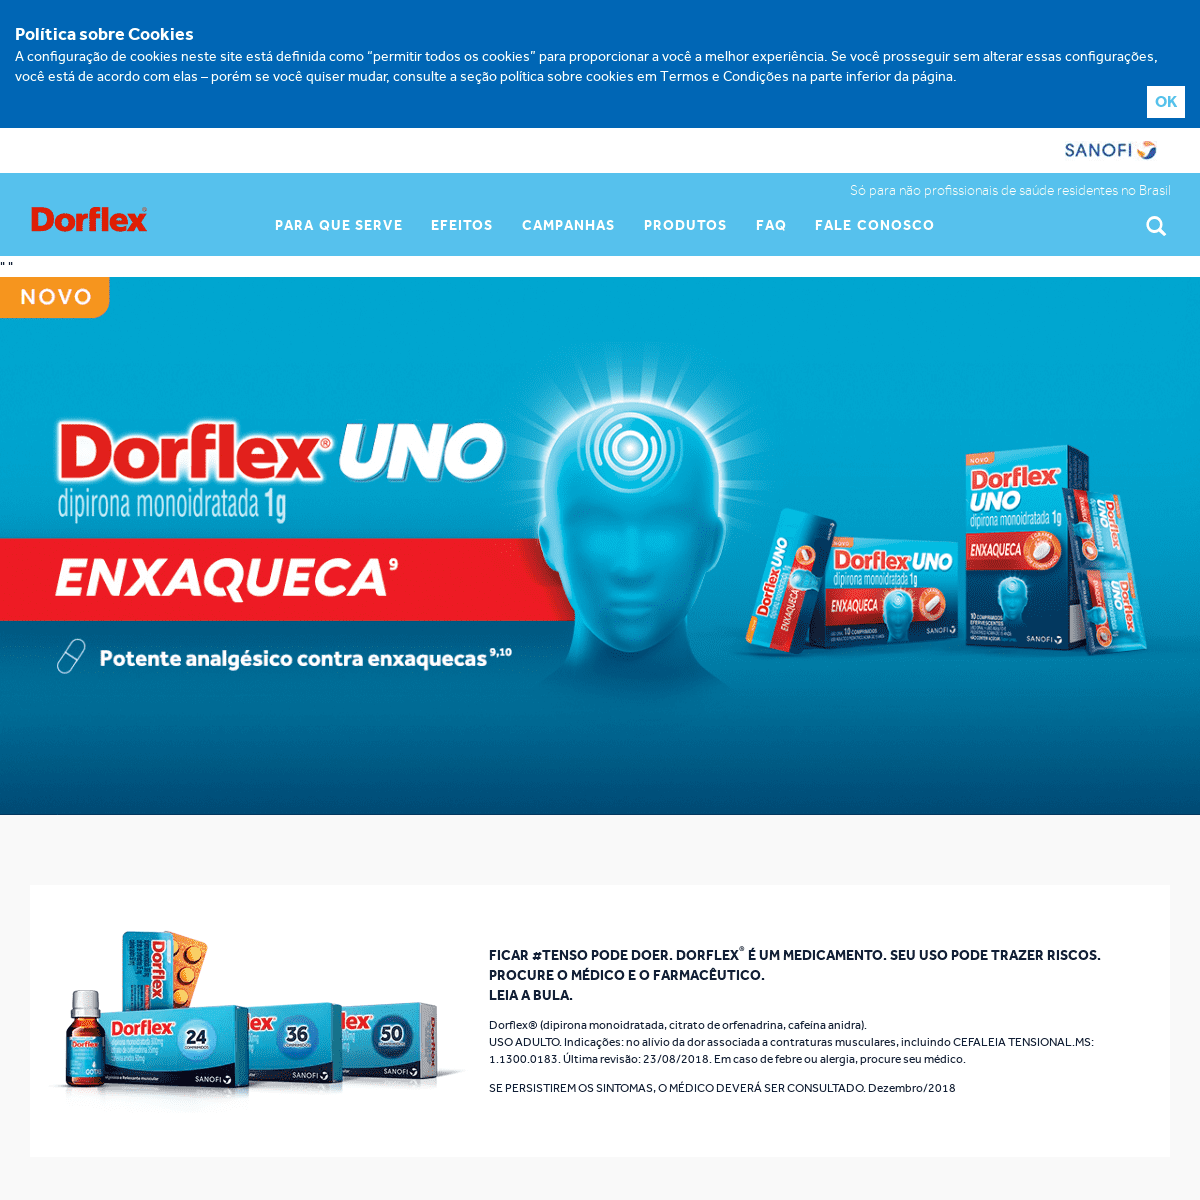 A complete backup of dorflex.com.br